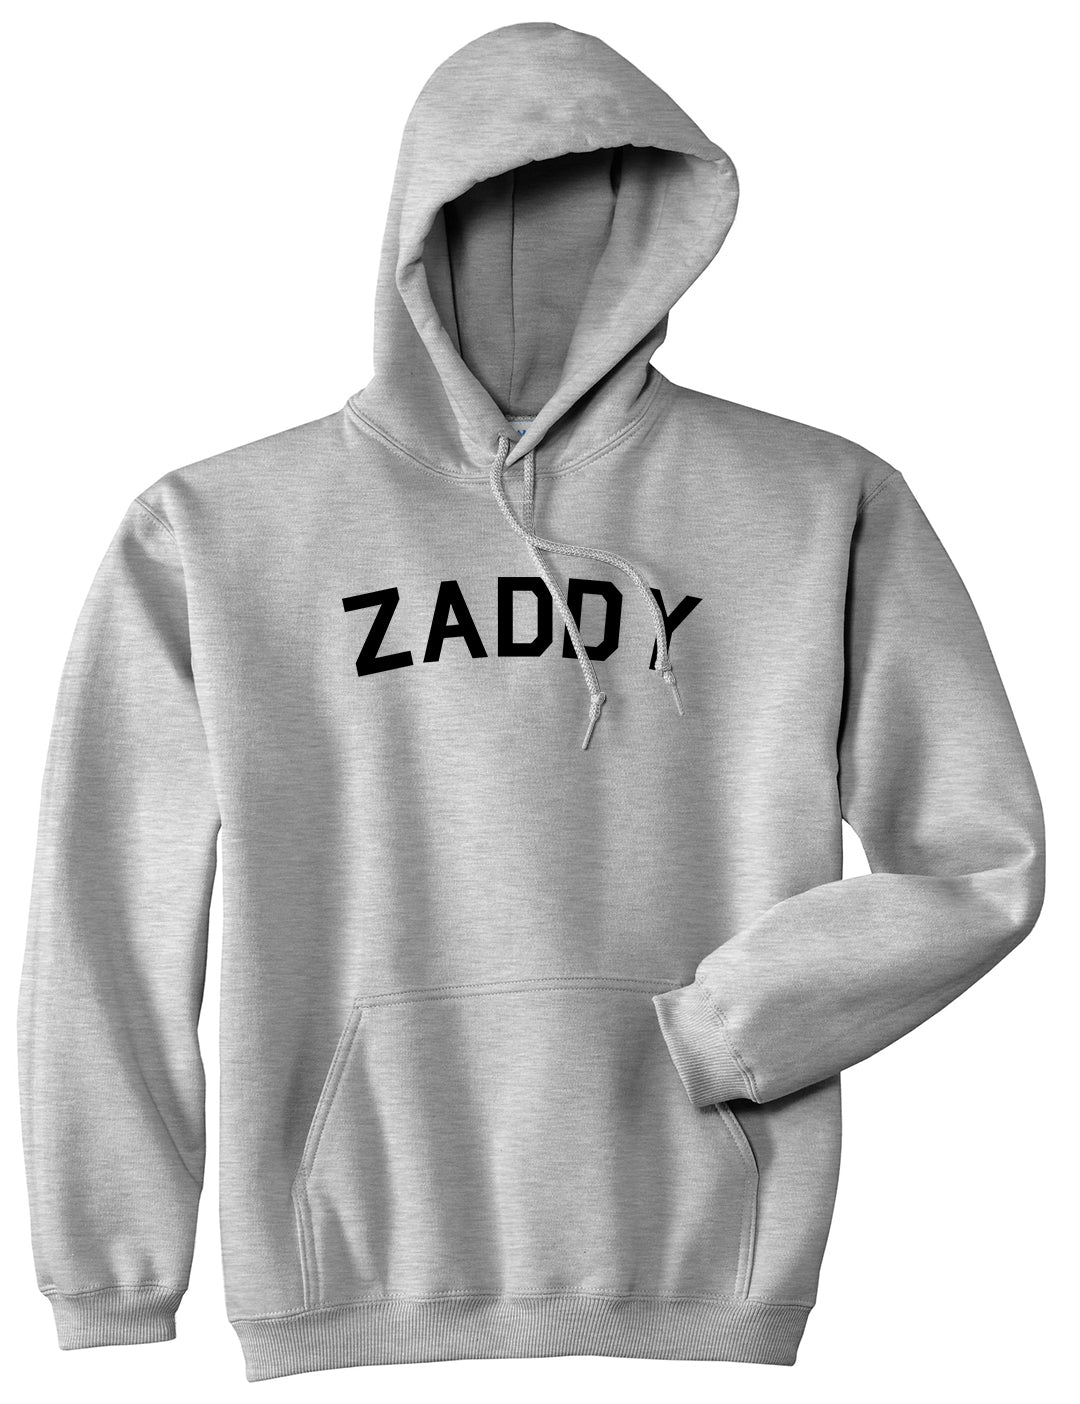 Zaddy Mens Pullover Hoodie Grey